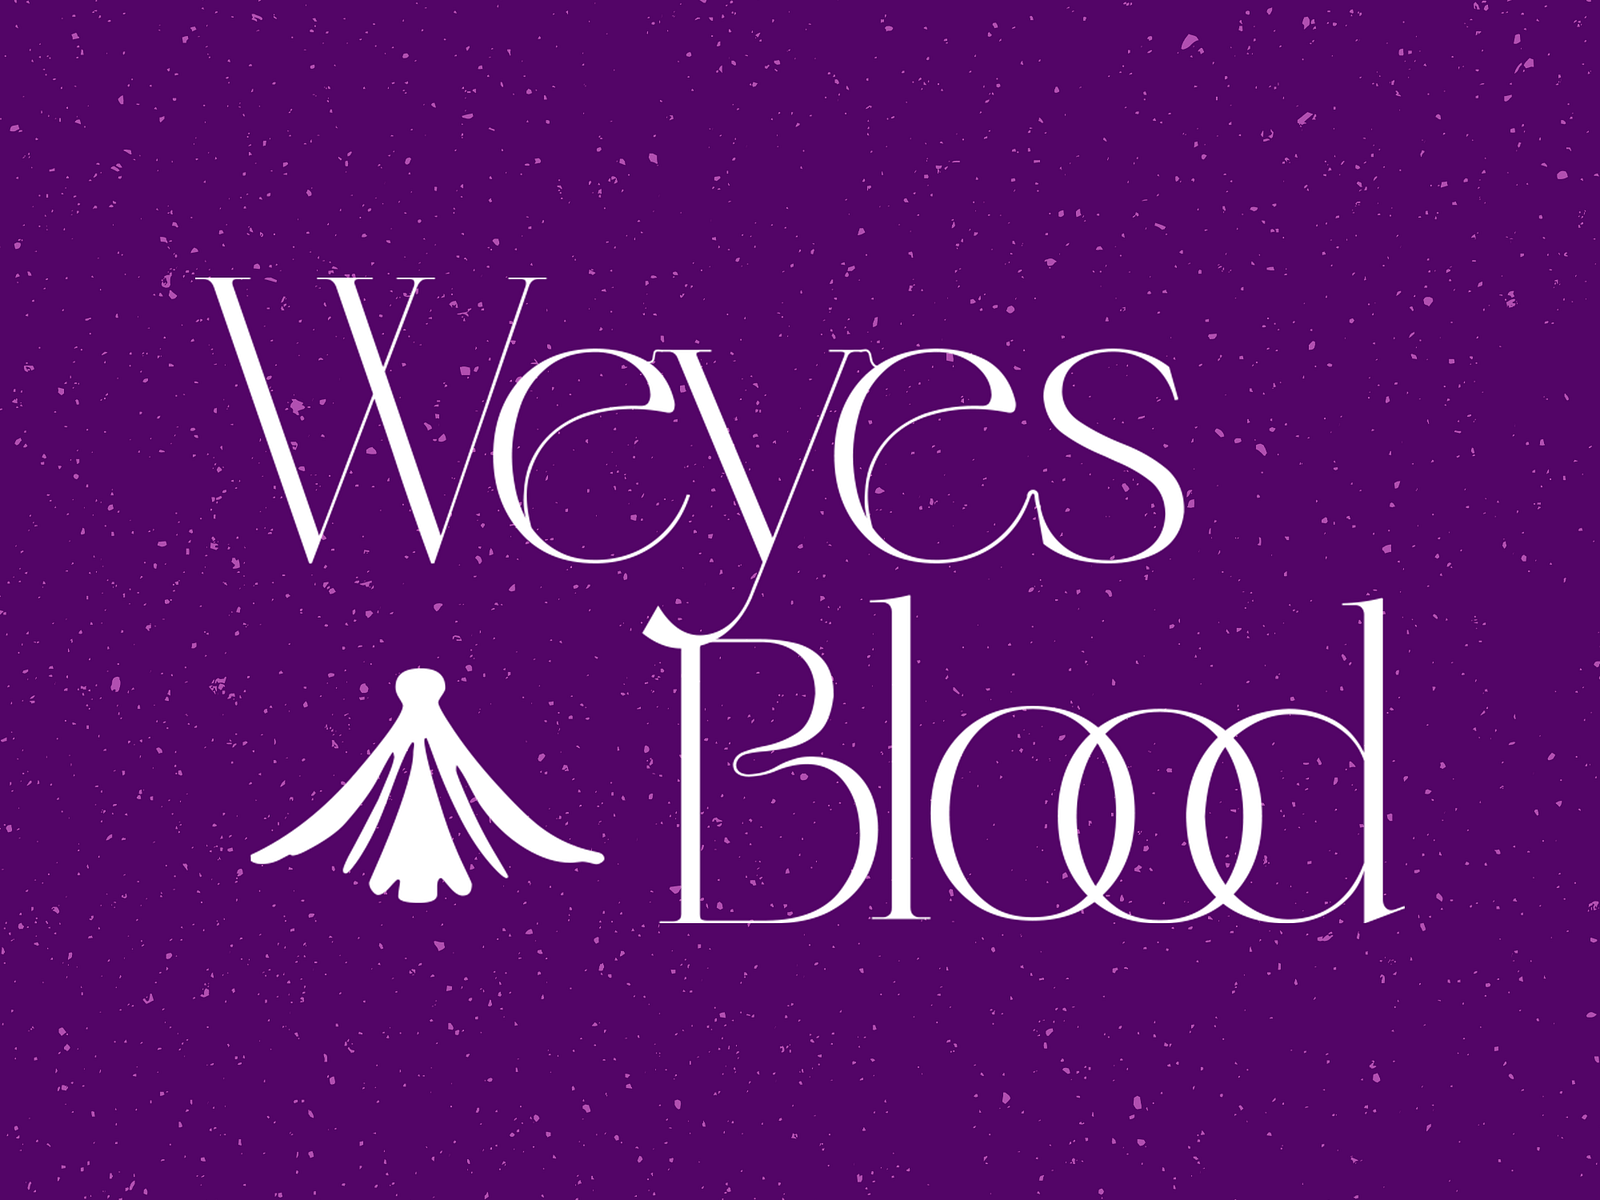 Weyes Blood logo by Chris Zappa on Dribbble